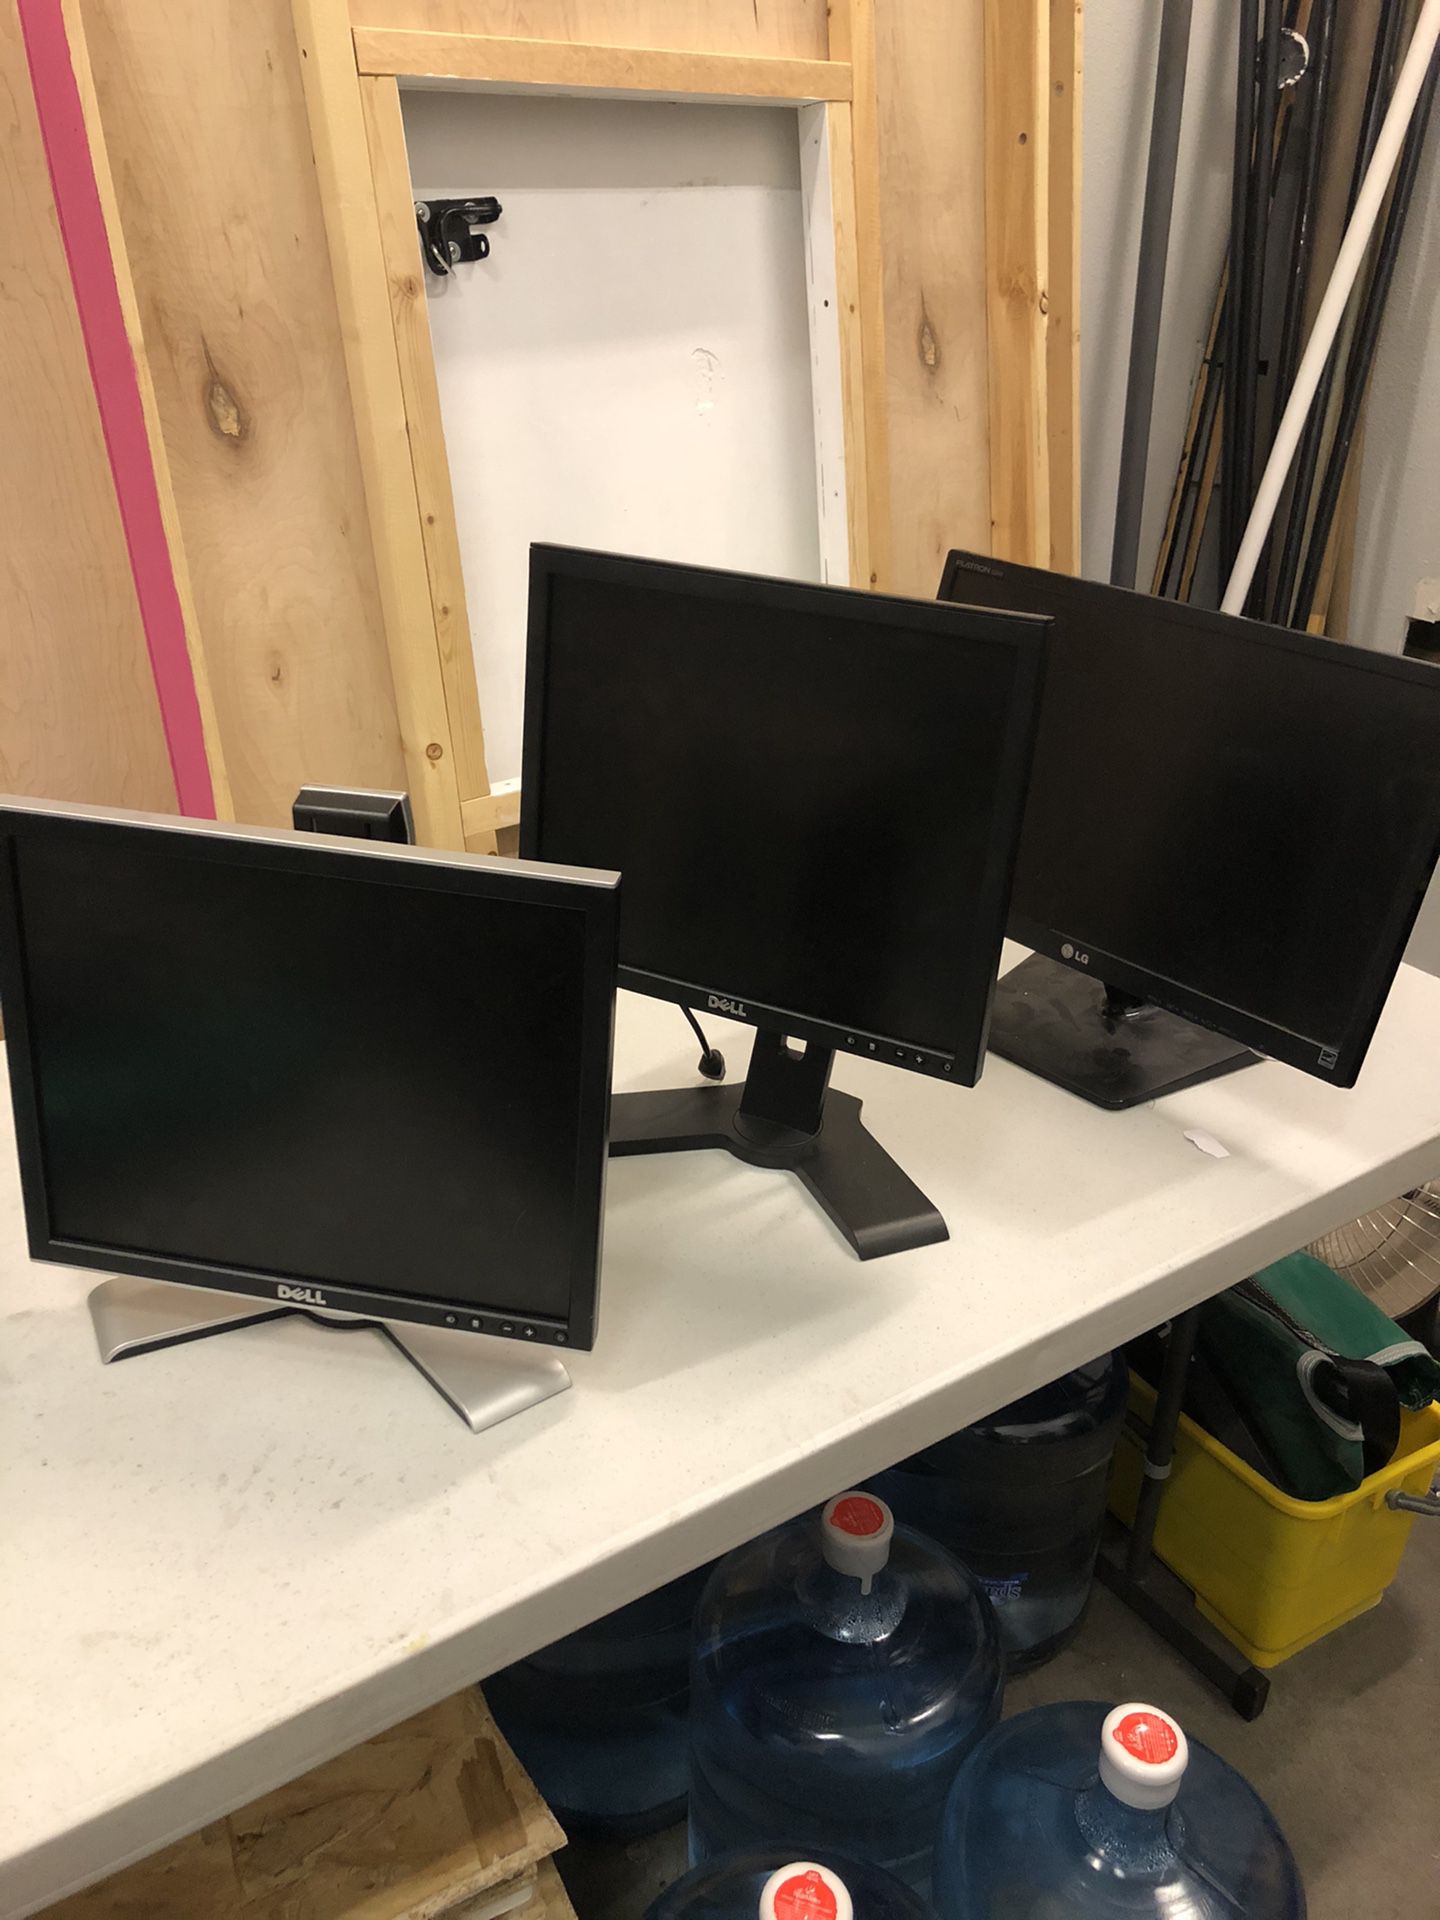 Computer Monitors (3; 1 LG and 2 Dell)